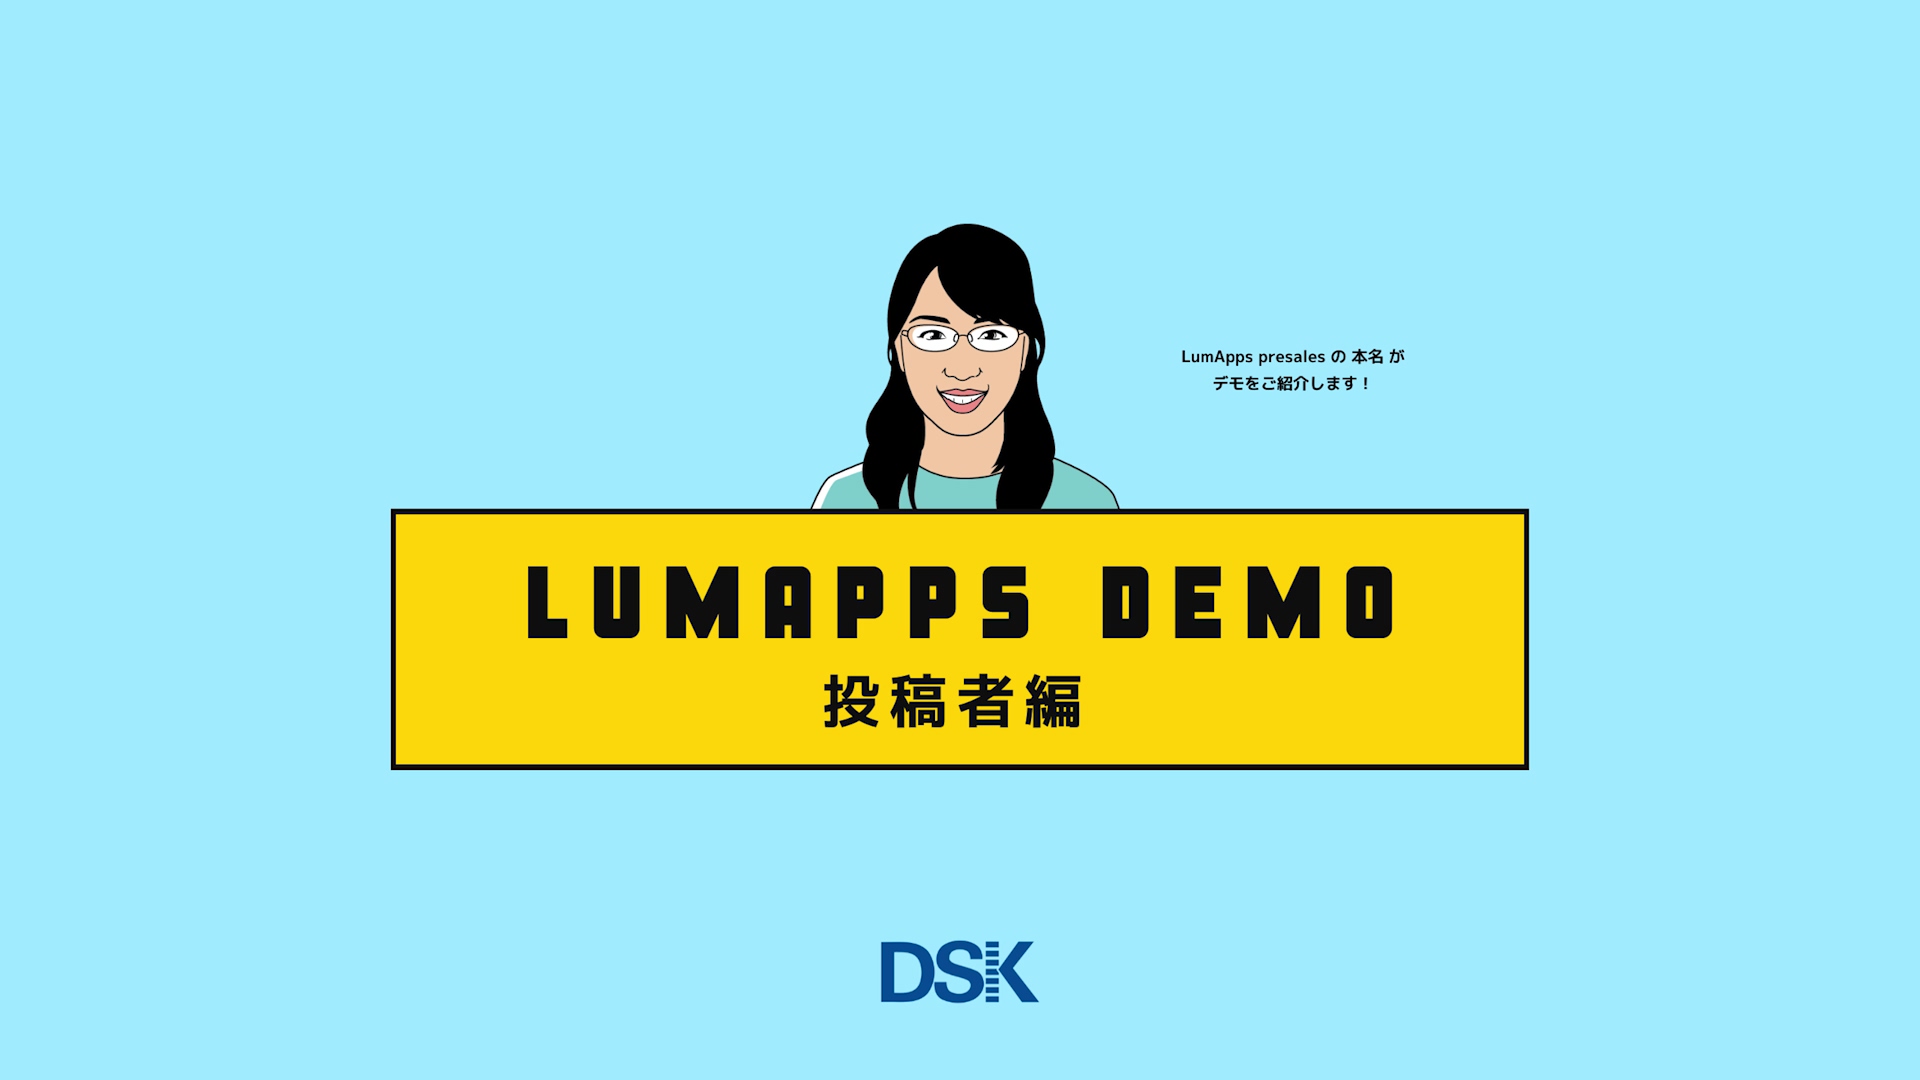 lumapps-demo-contributor